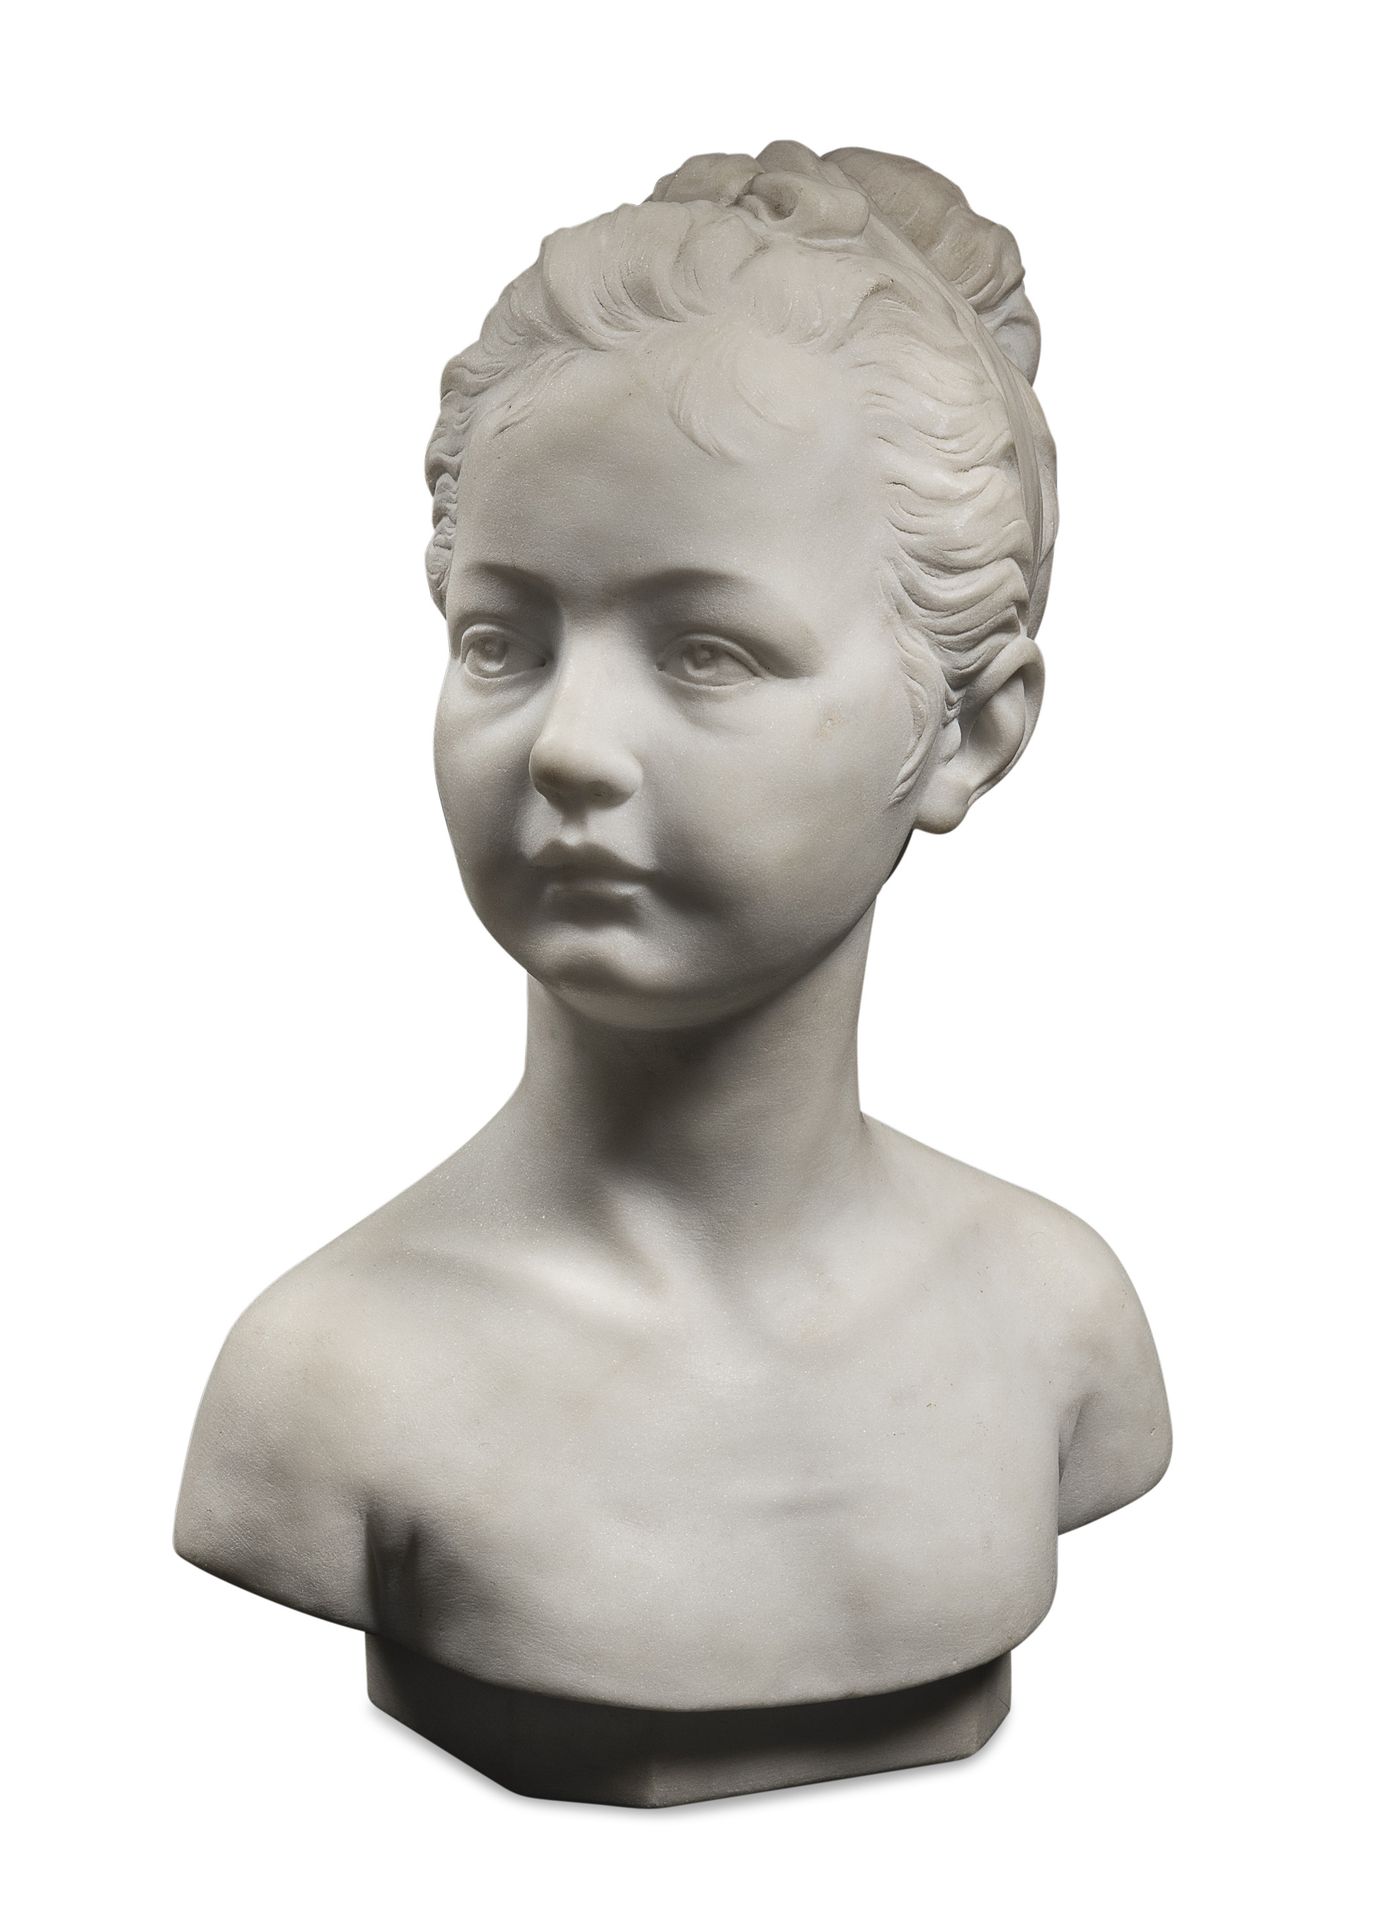 Null 意大利雕塑家，19世纪



年轻女子半身像

白色大理石雕塑，cm. 40 x 27 x 15